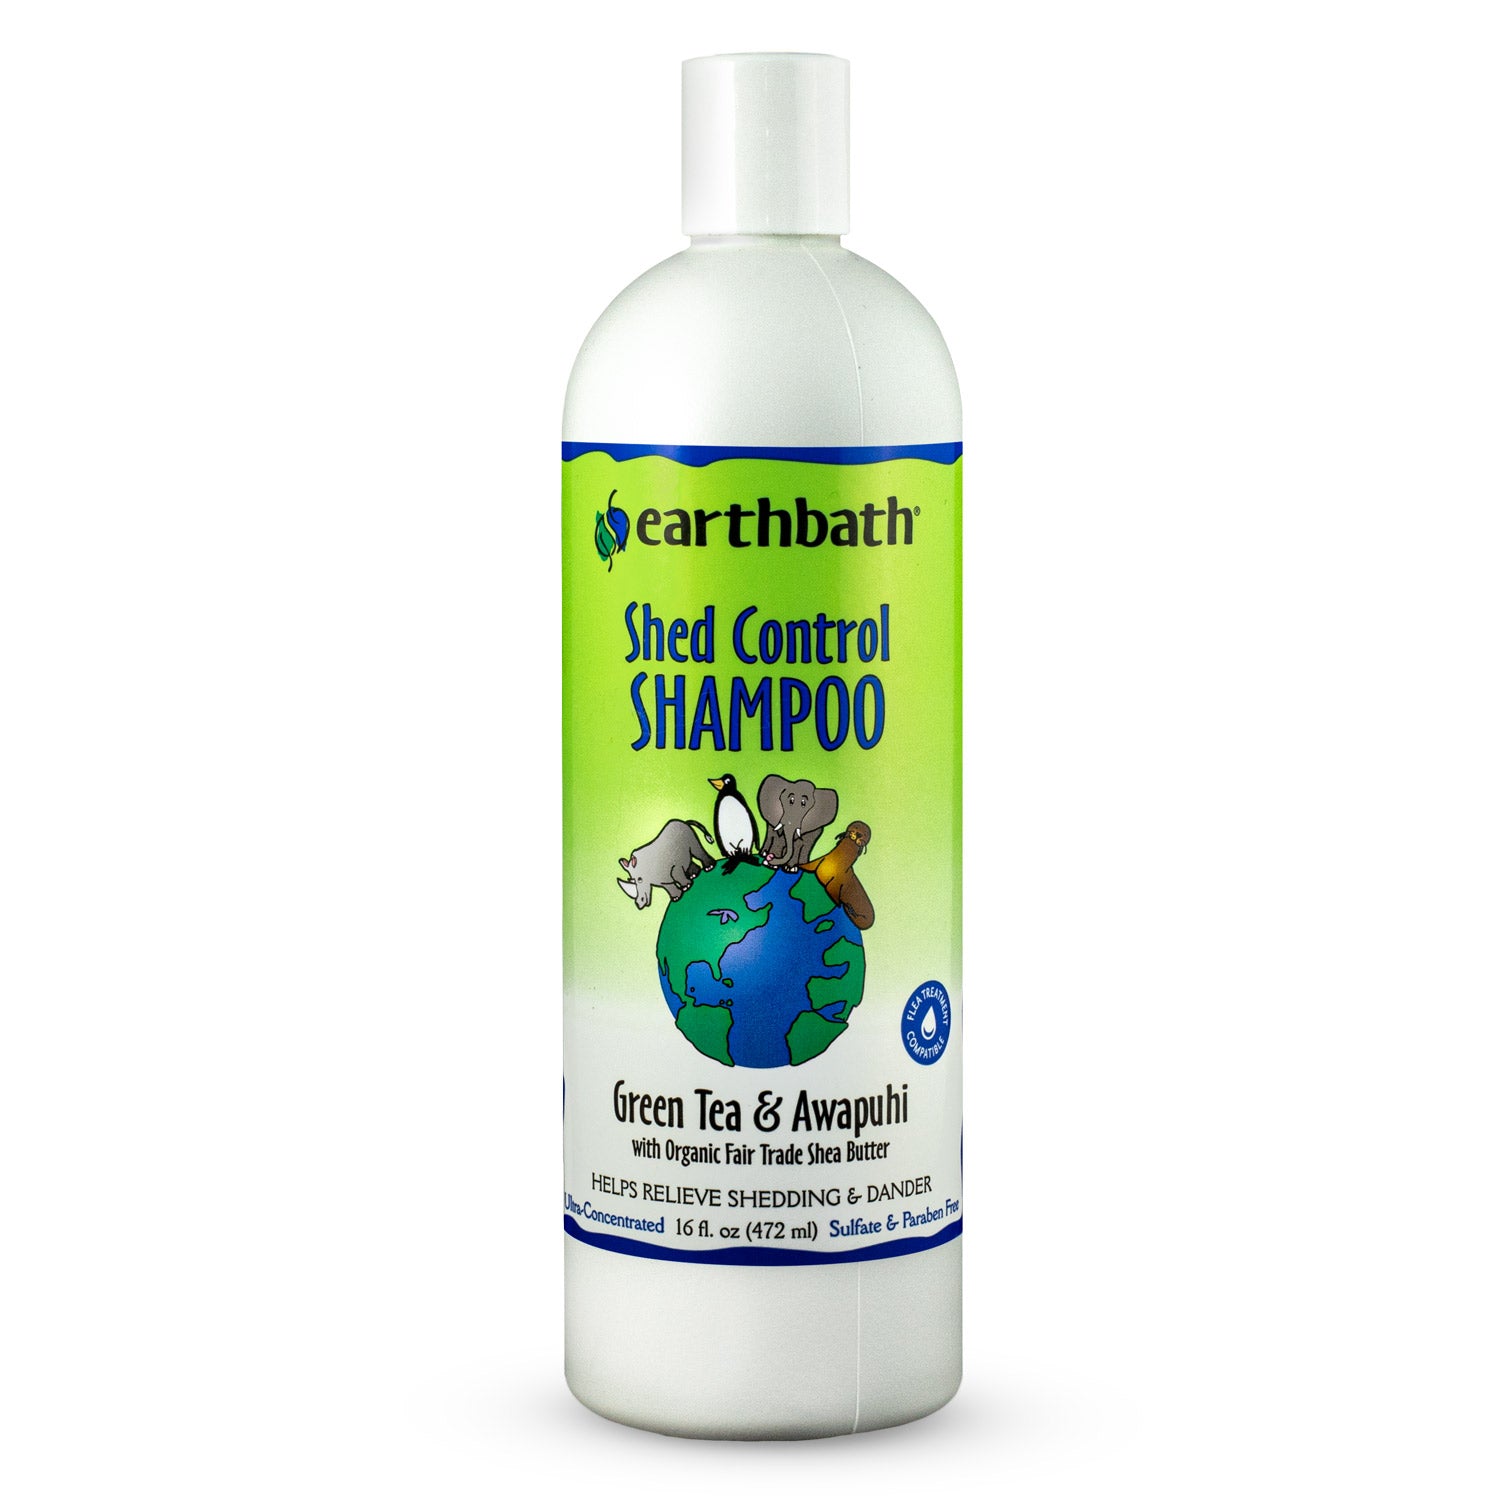 EARTHBATH Shed Control Shampoo (Green Tea & Awapuhi) 472ml